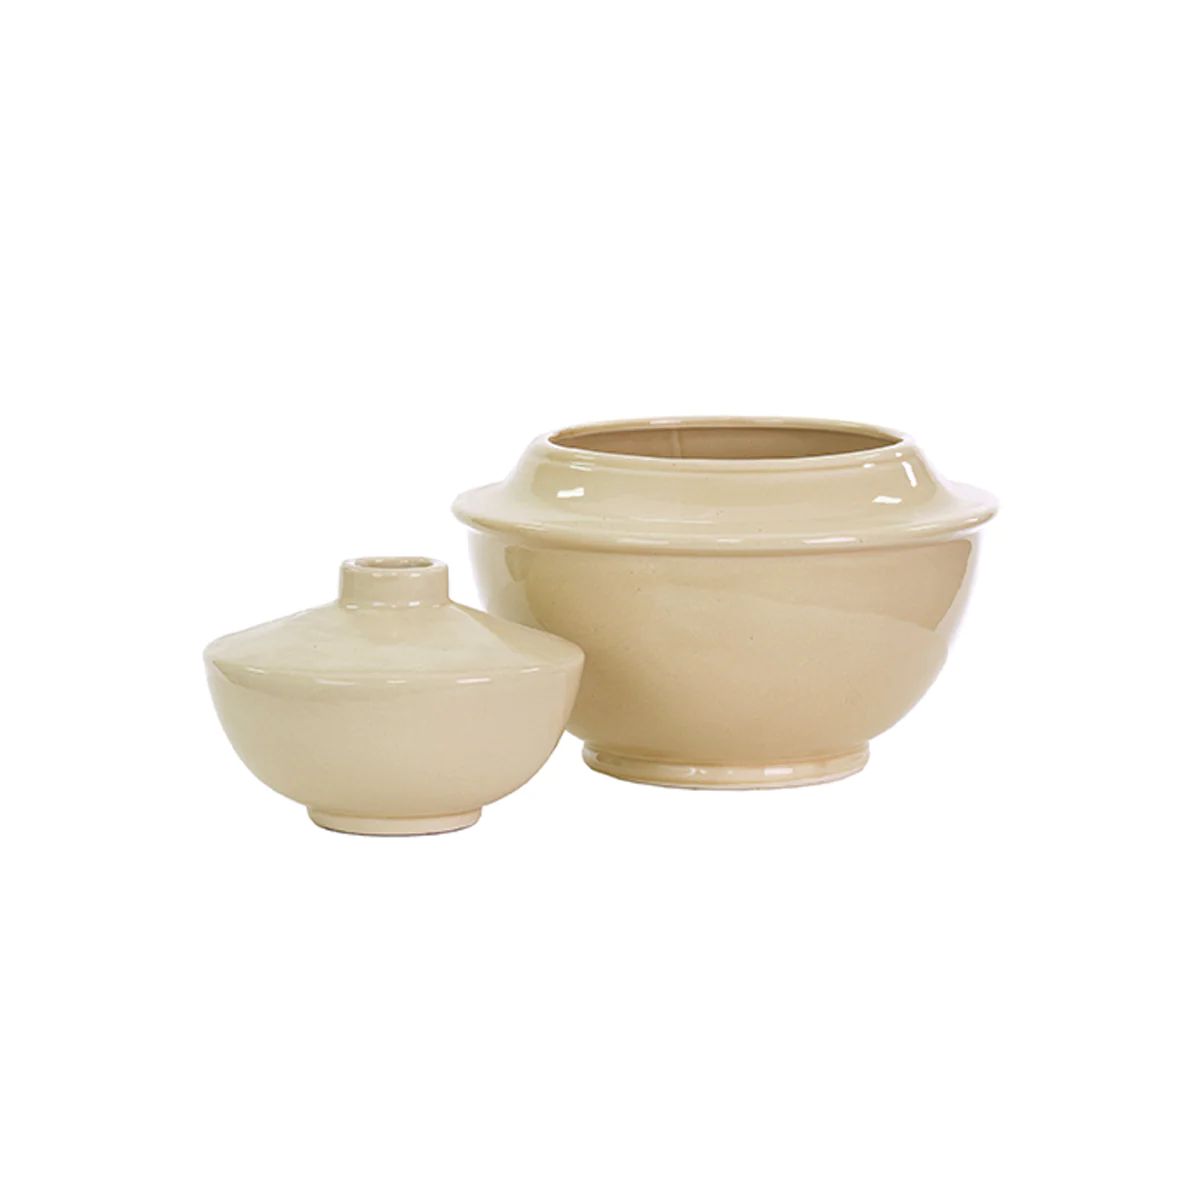 Ceramic Pottery Pair | Tuesday Made